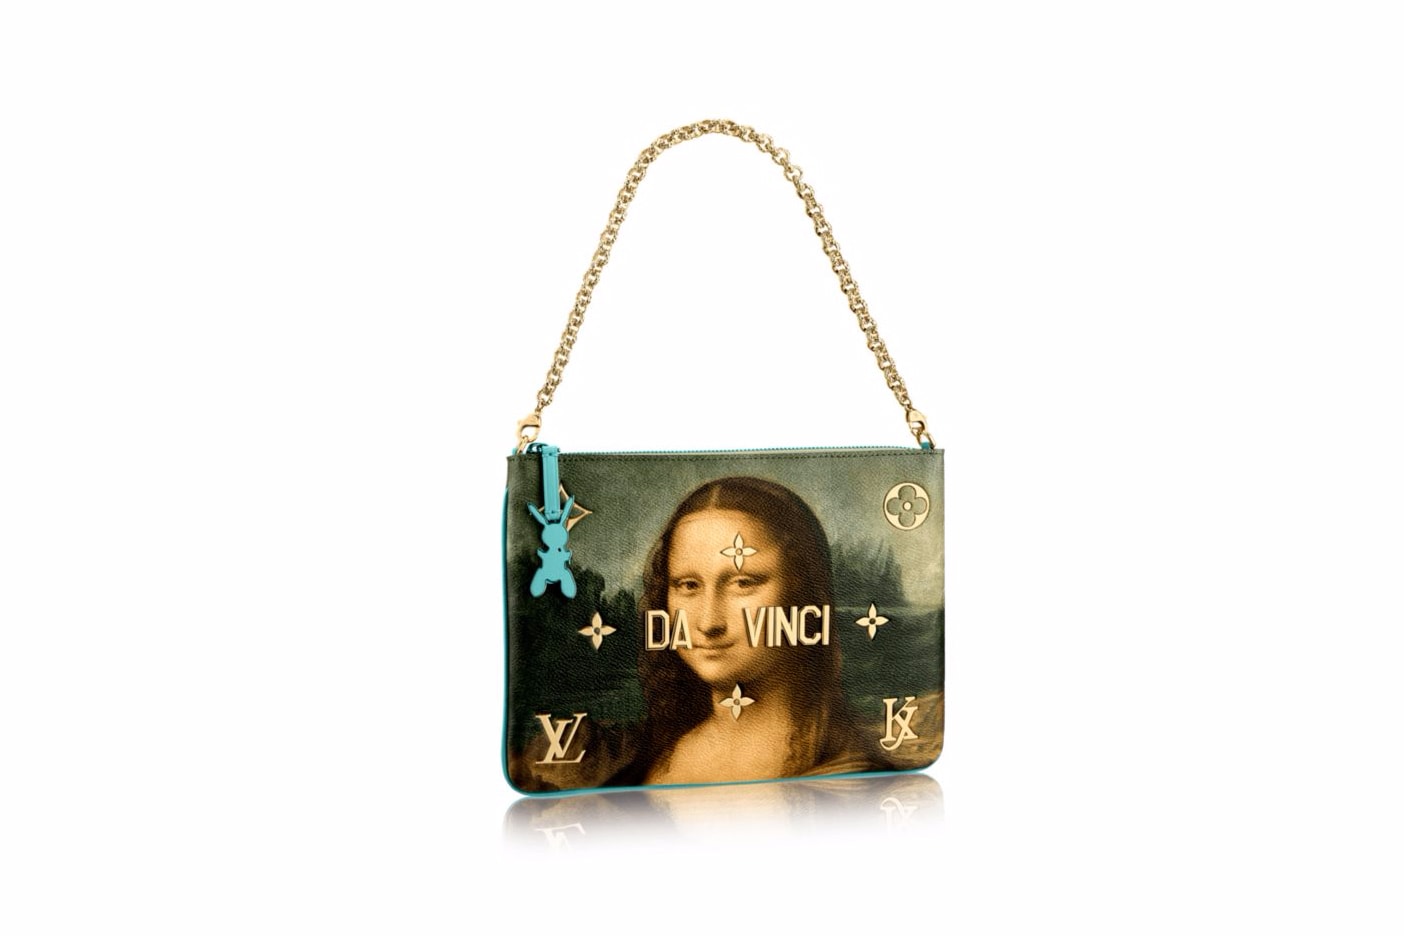 Go Wild with Louis Vuitton's Safari-Inspired Bags